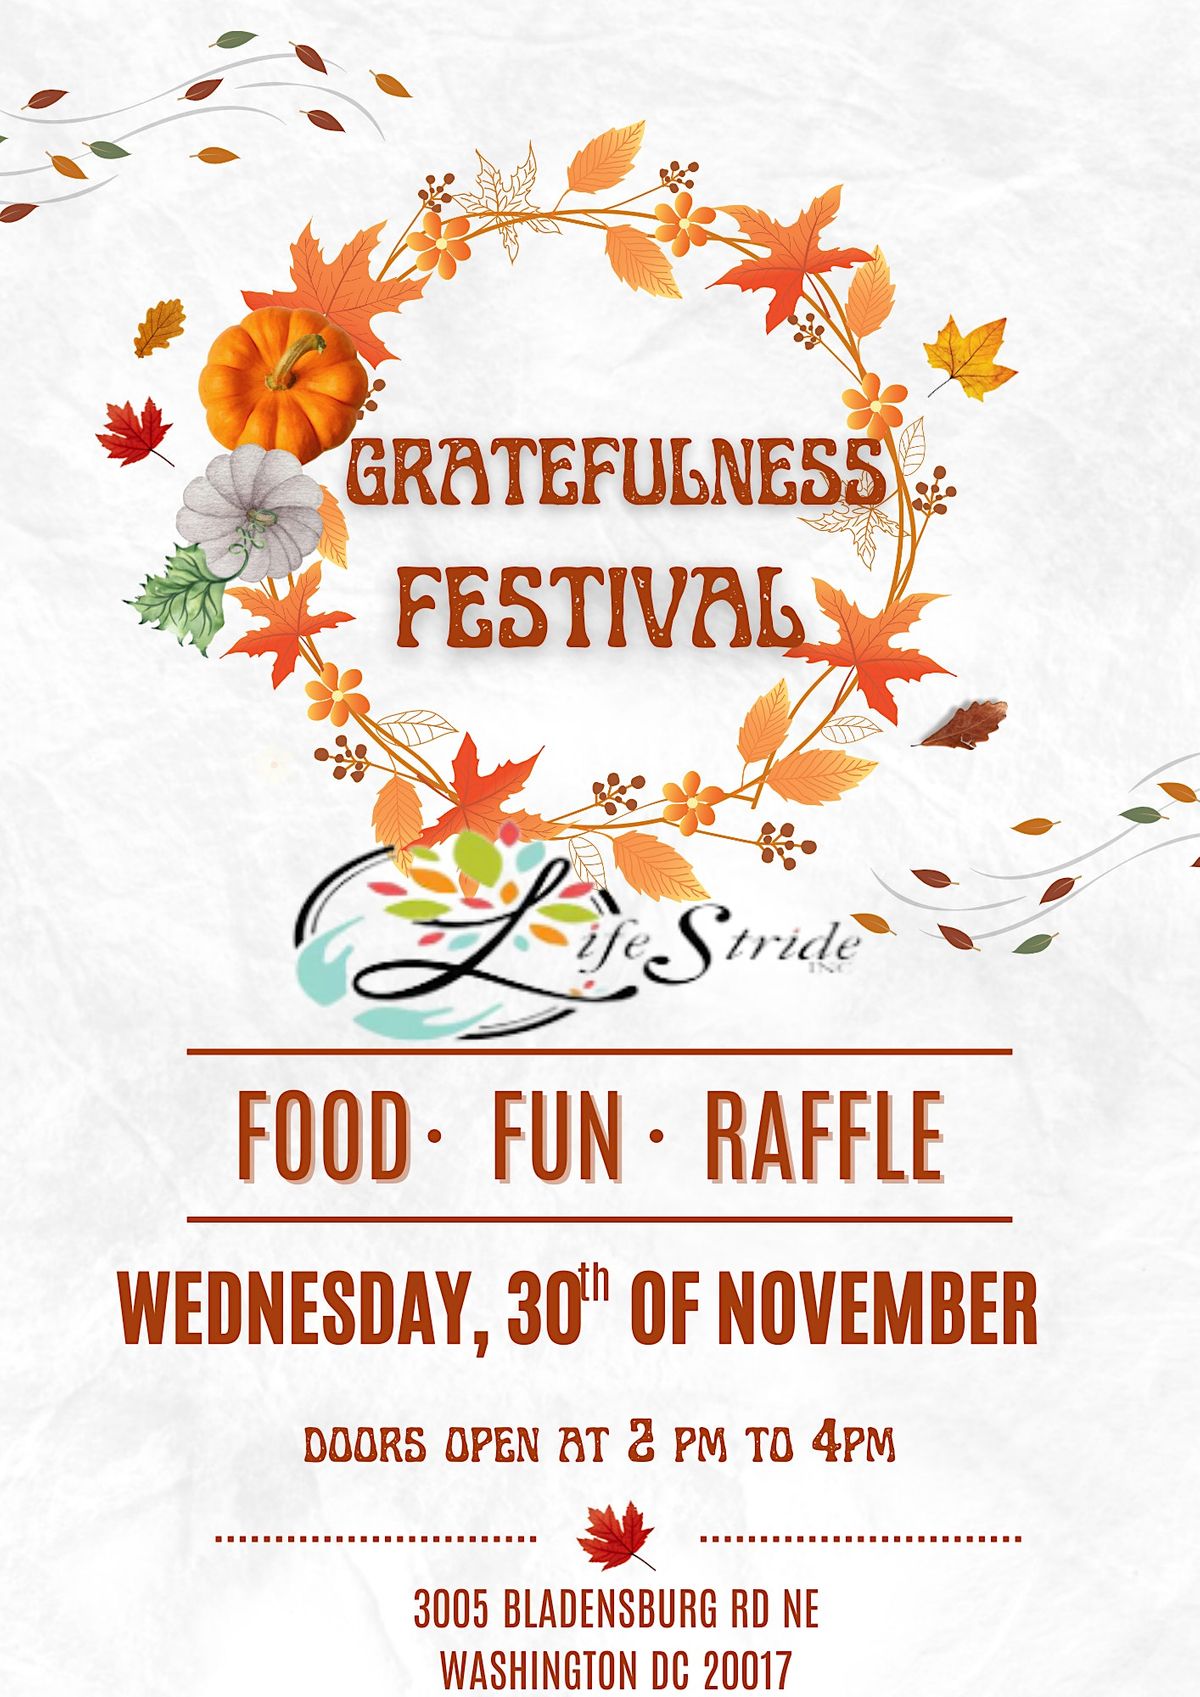 Life Stride's Gratefulness Festival